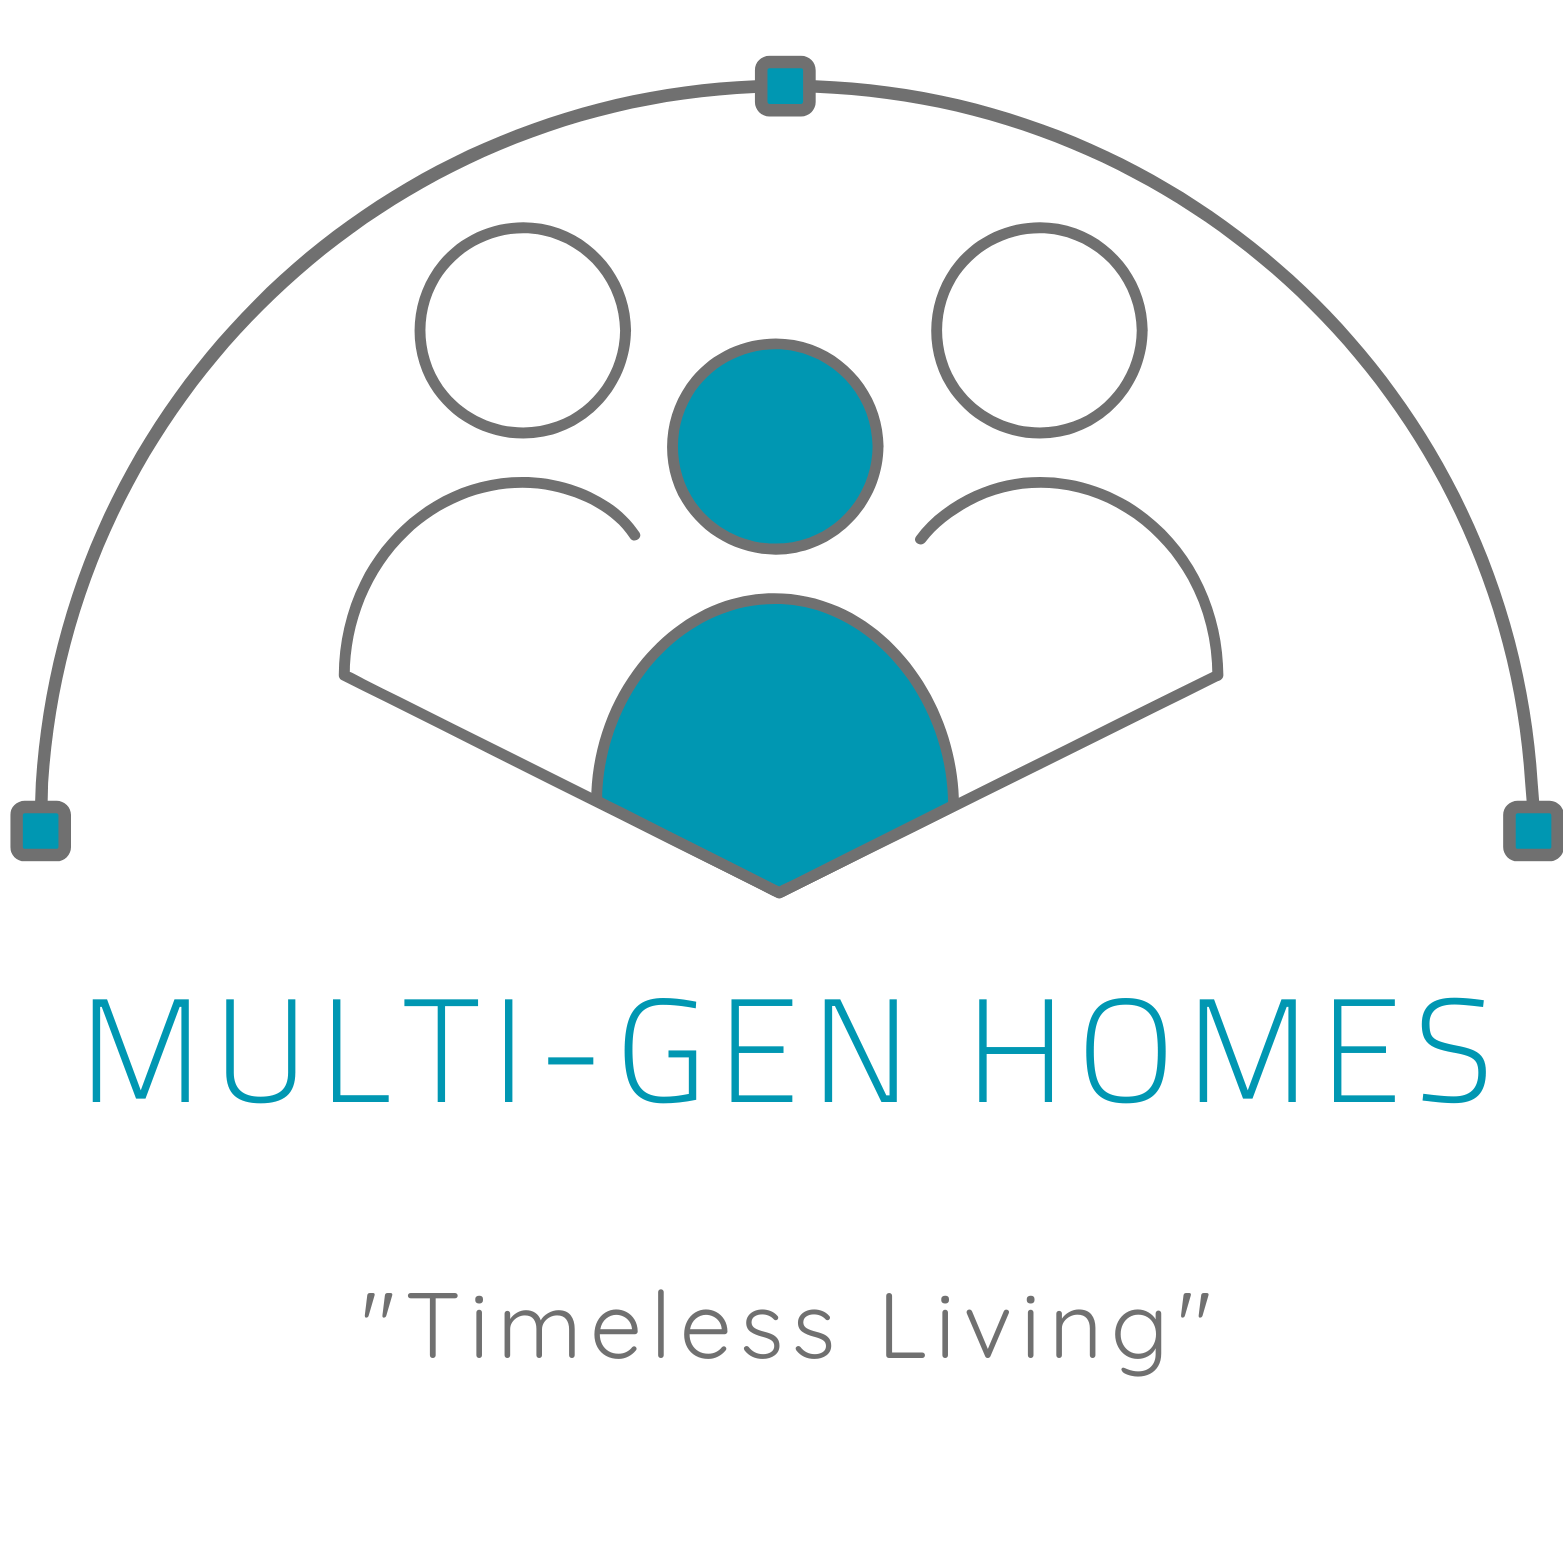 Multi Gen Homes Logo